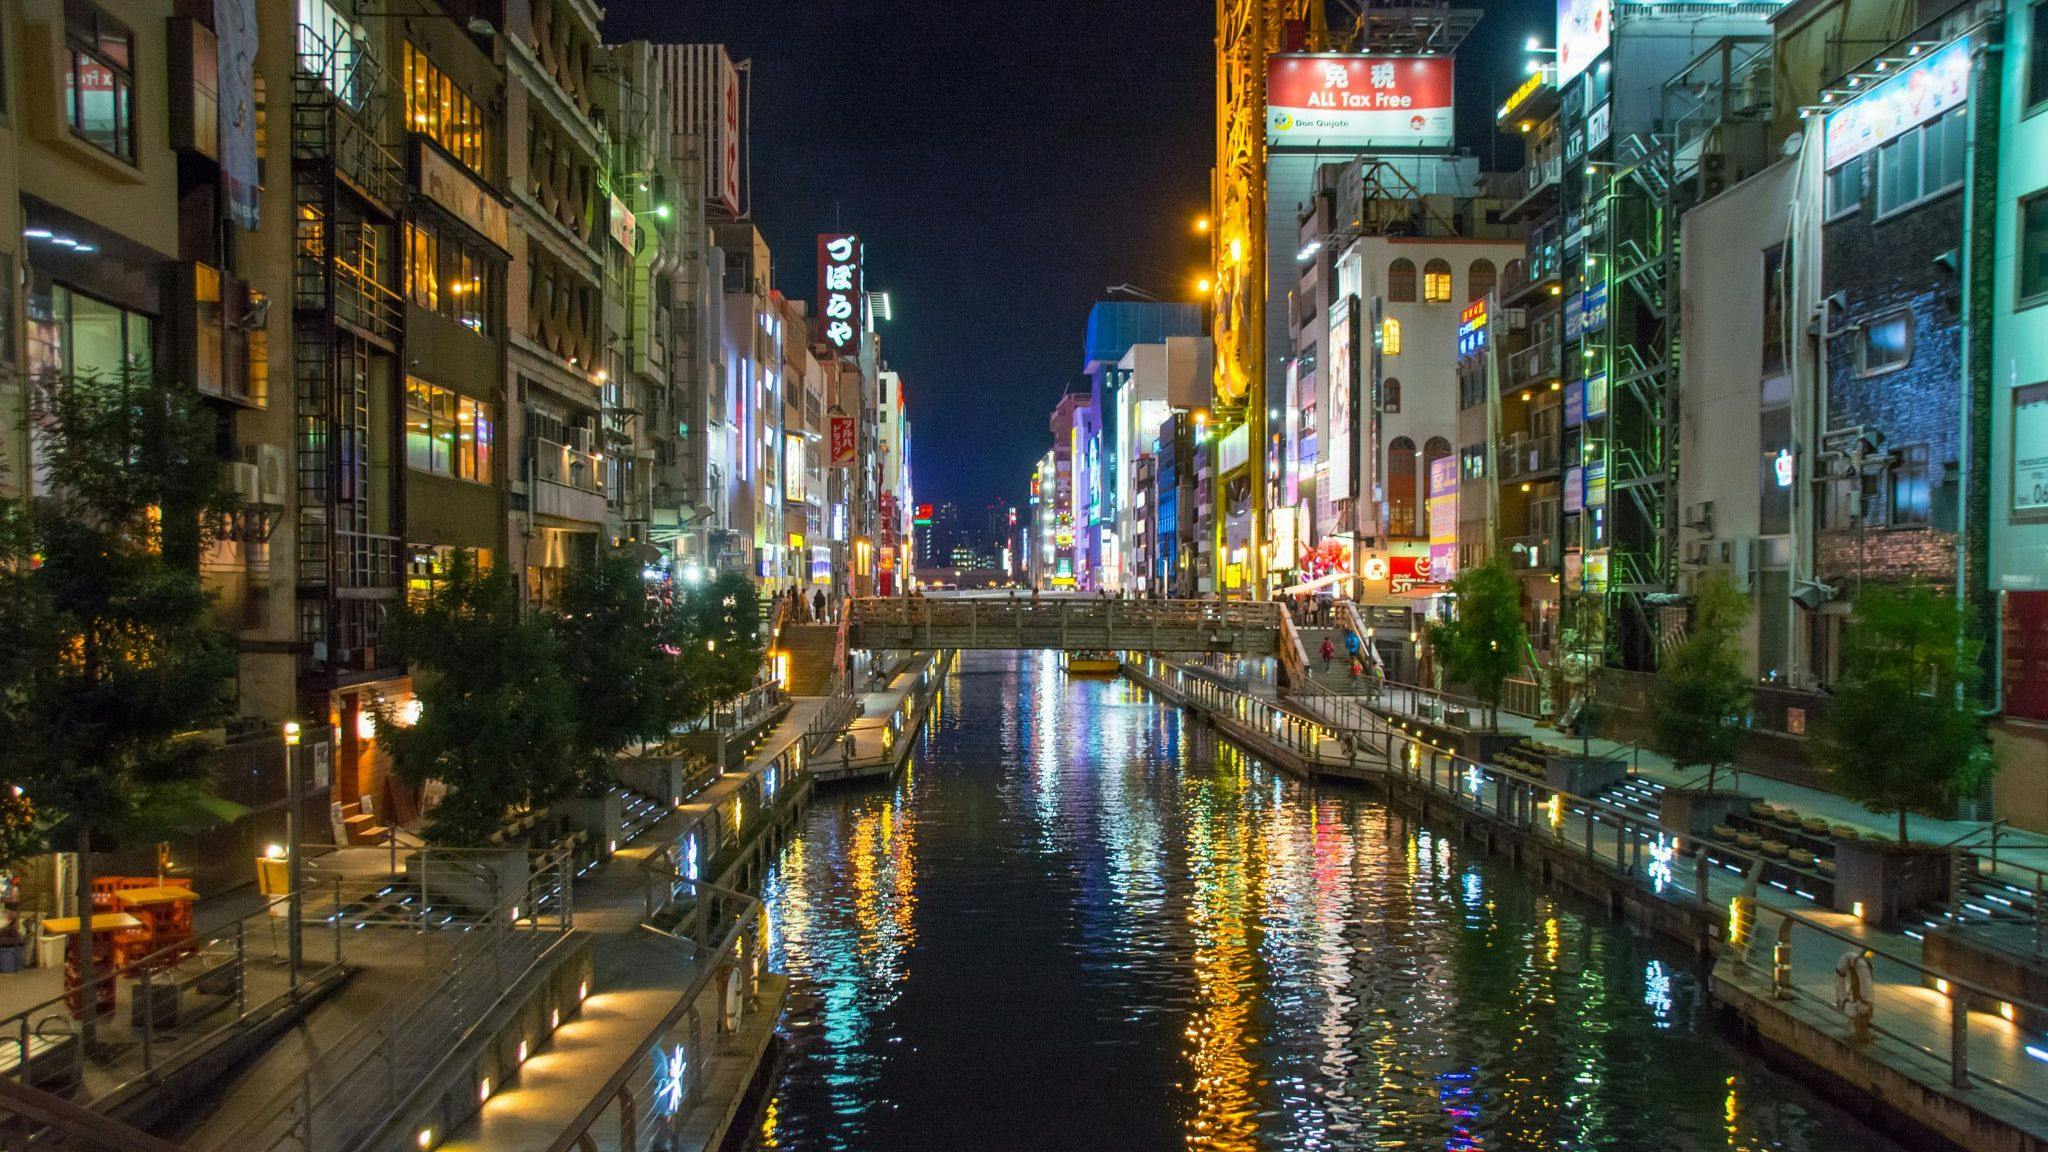 Dōtonbori canal at night